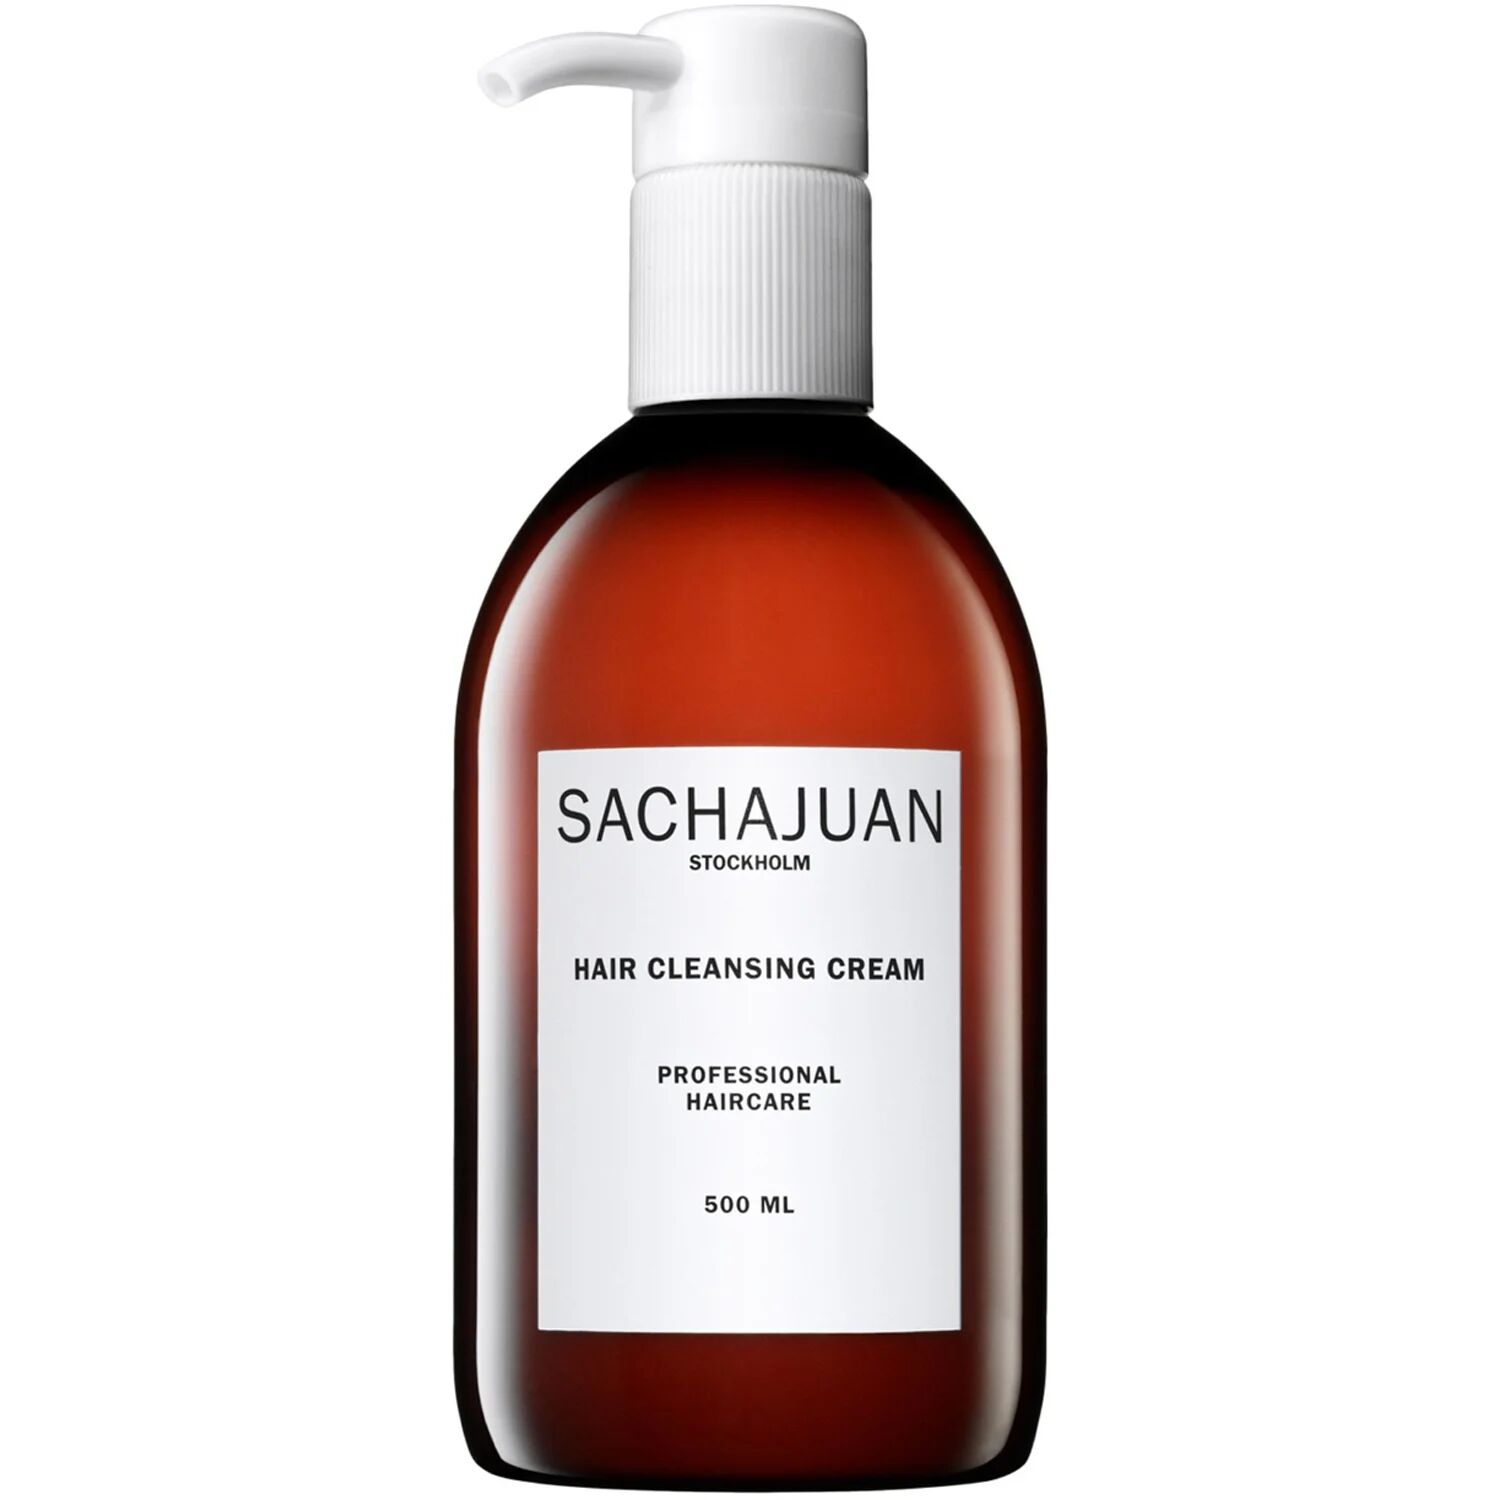 SACHAJUAN Hair Cleansing Cream, 500 ml Sachajuan Cleansing Conditioner